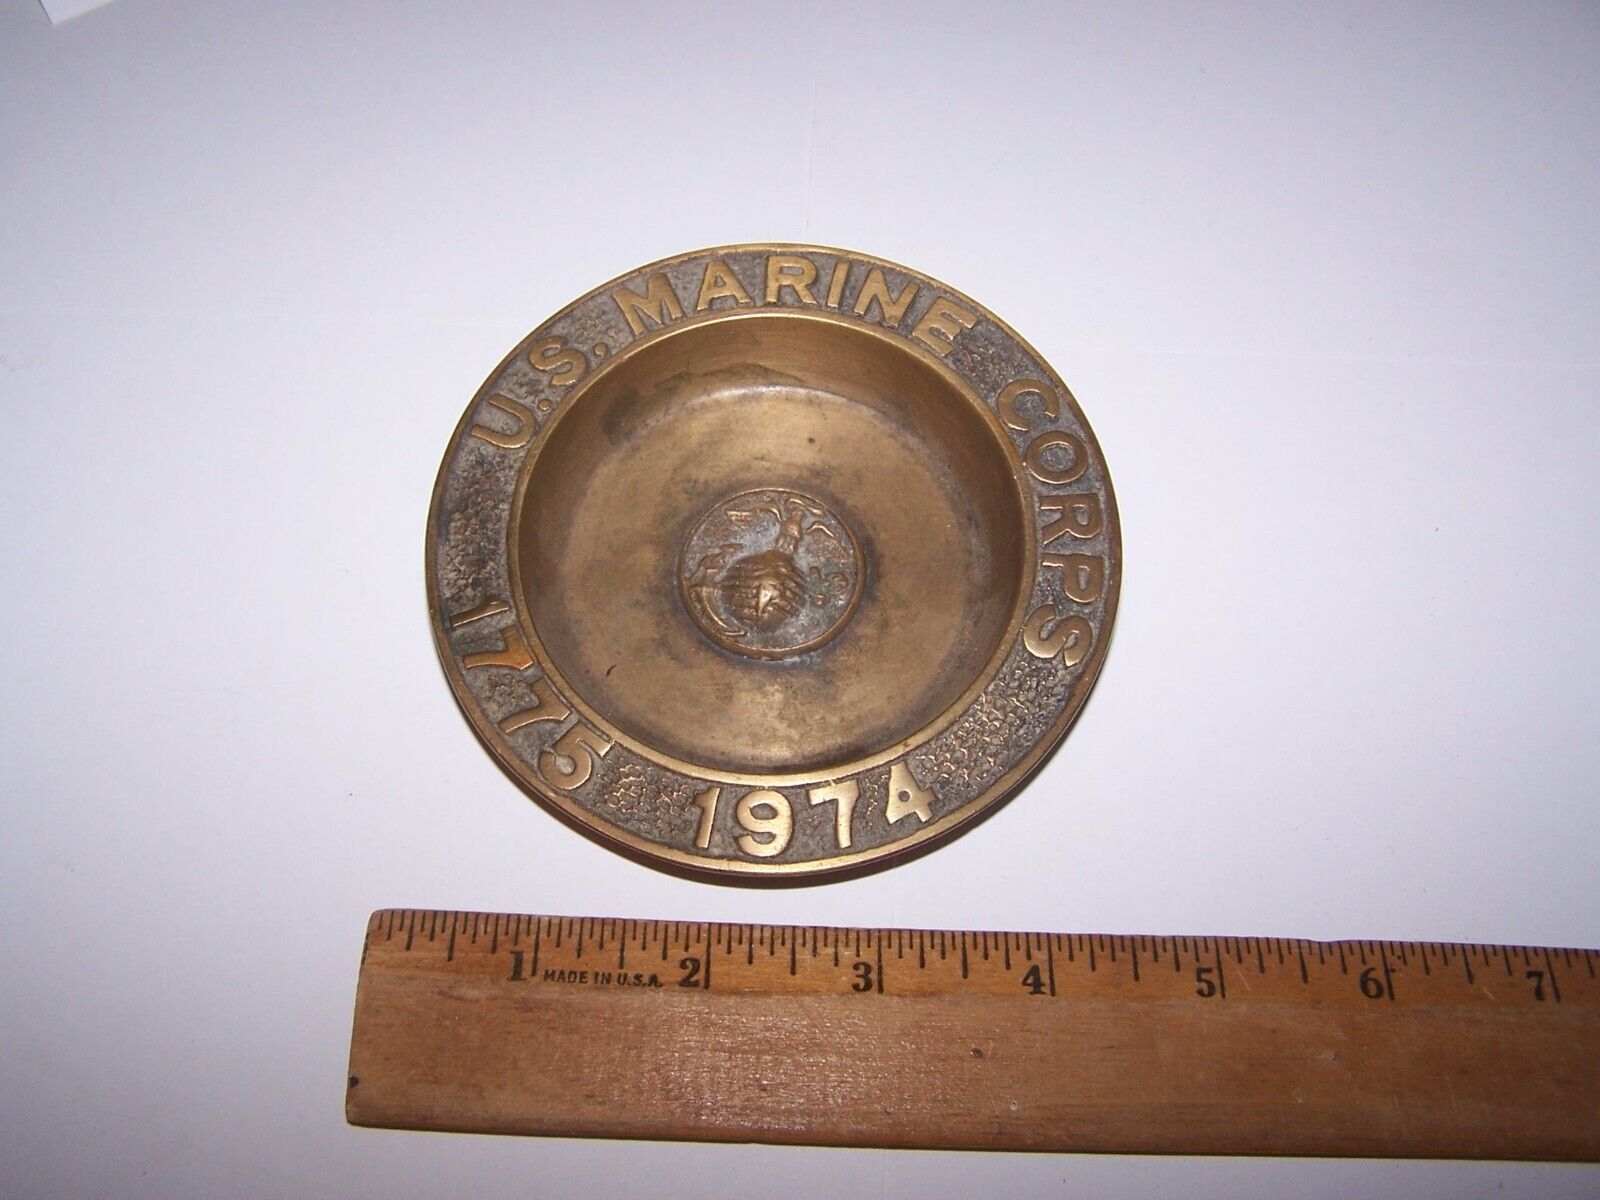 1775-1974 U.S. MARINE CORPS Brass Ashtray - Layne Stipp on bottom